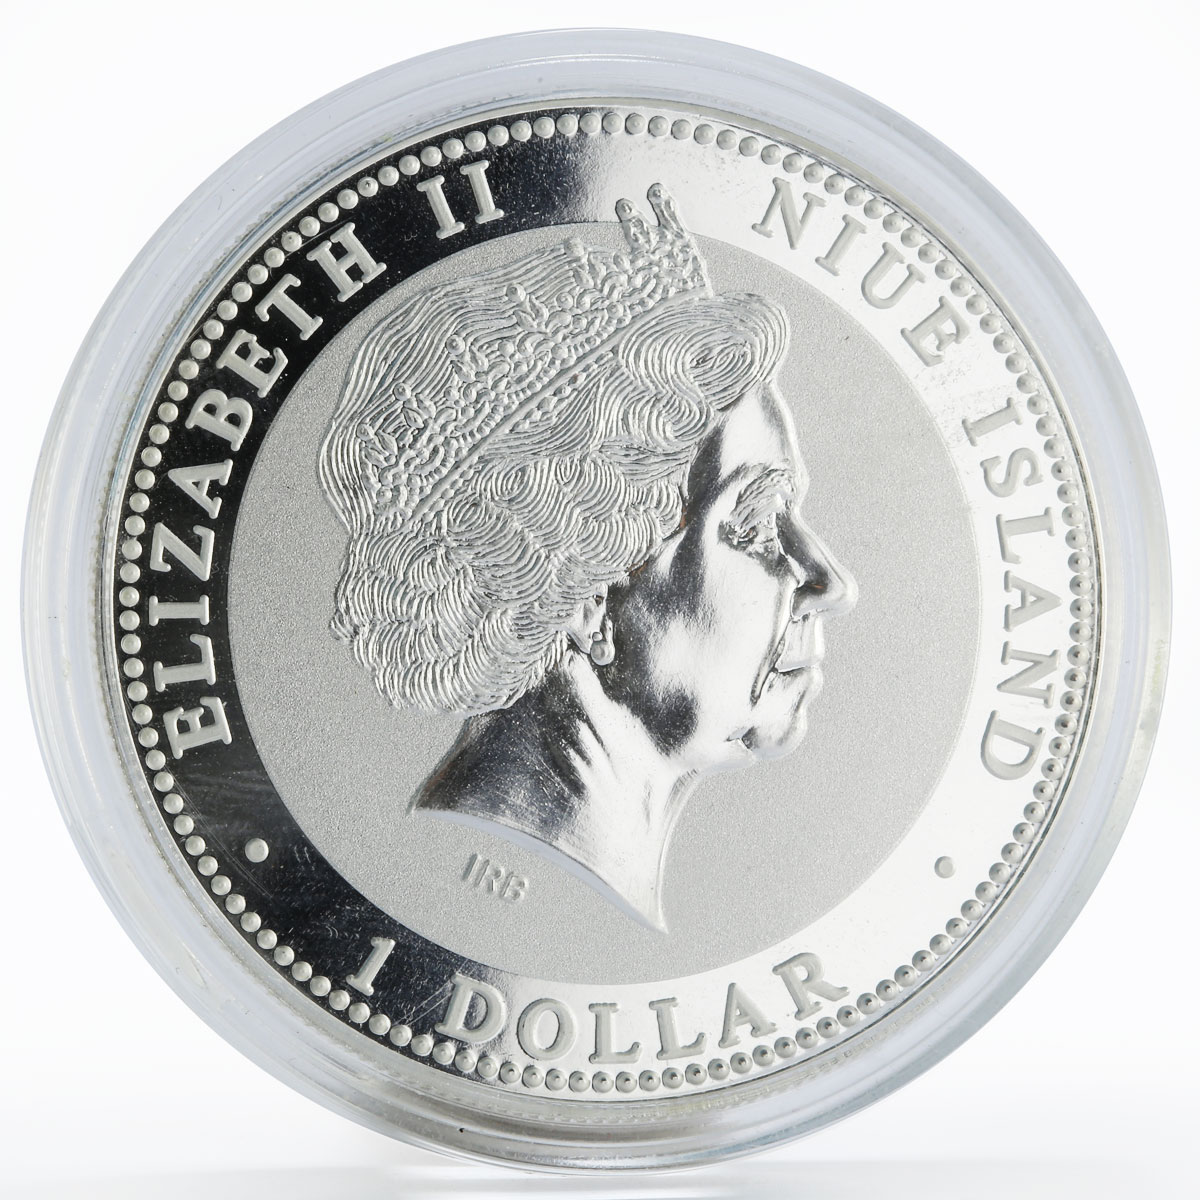 Niue 1 dollar Year of the Rat Lunar Calendar silver coin 2008